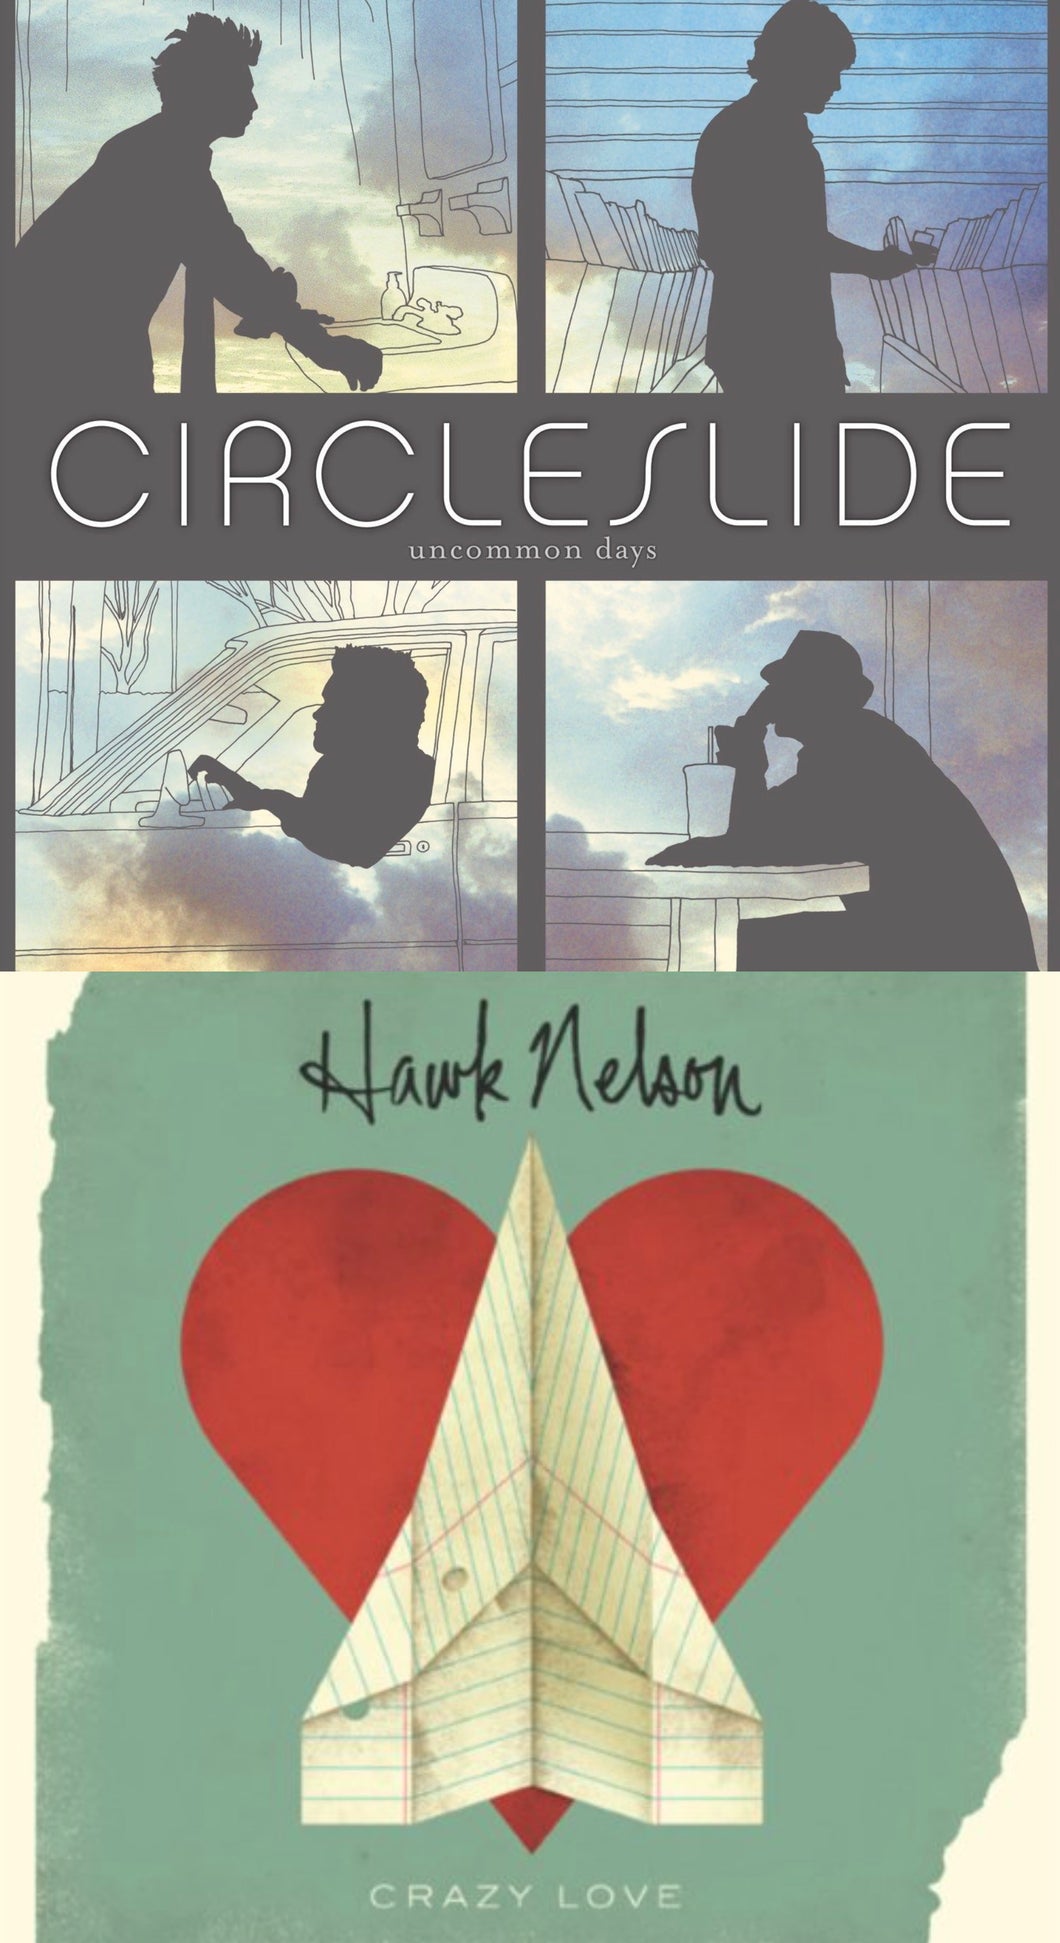 Circleslide Uncommon Days + Hawk Nelson Crazy Love 2CD